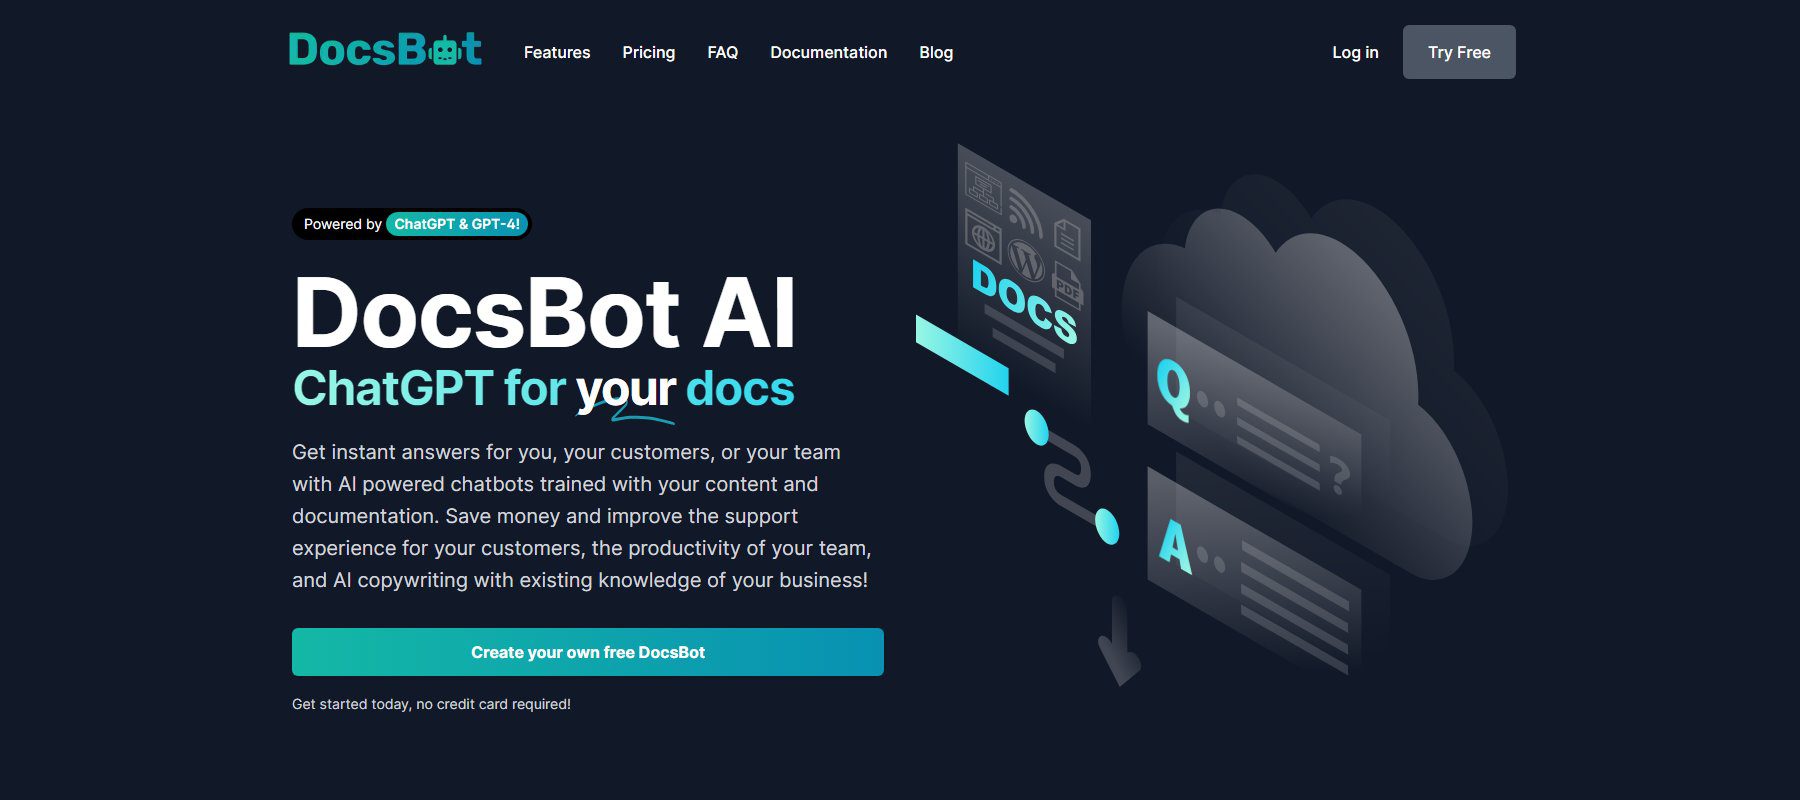 Docsbot AI 聊天机器人 - 主页